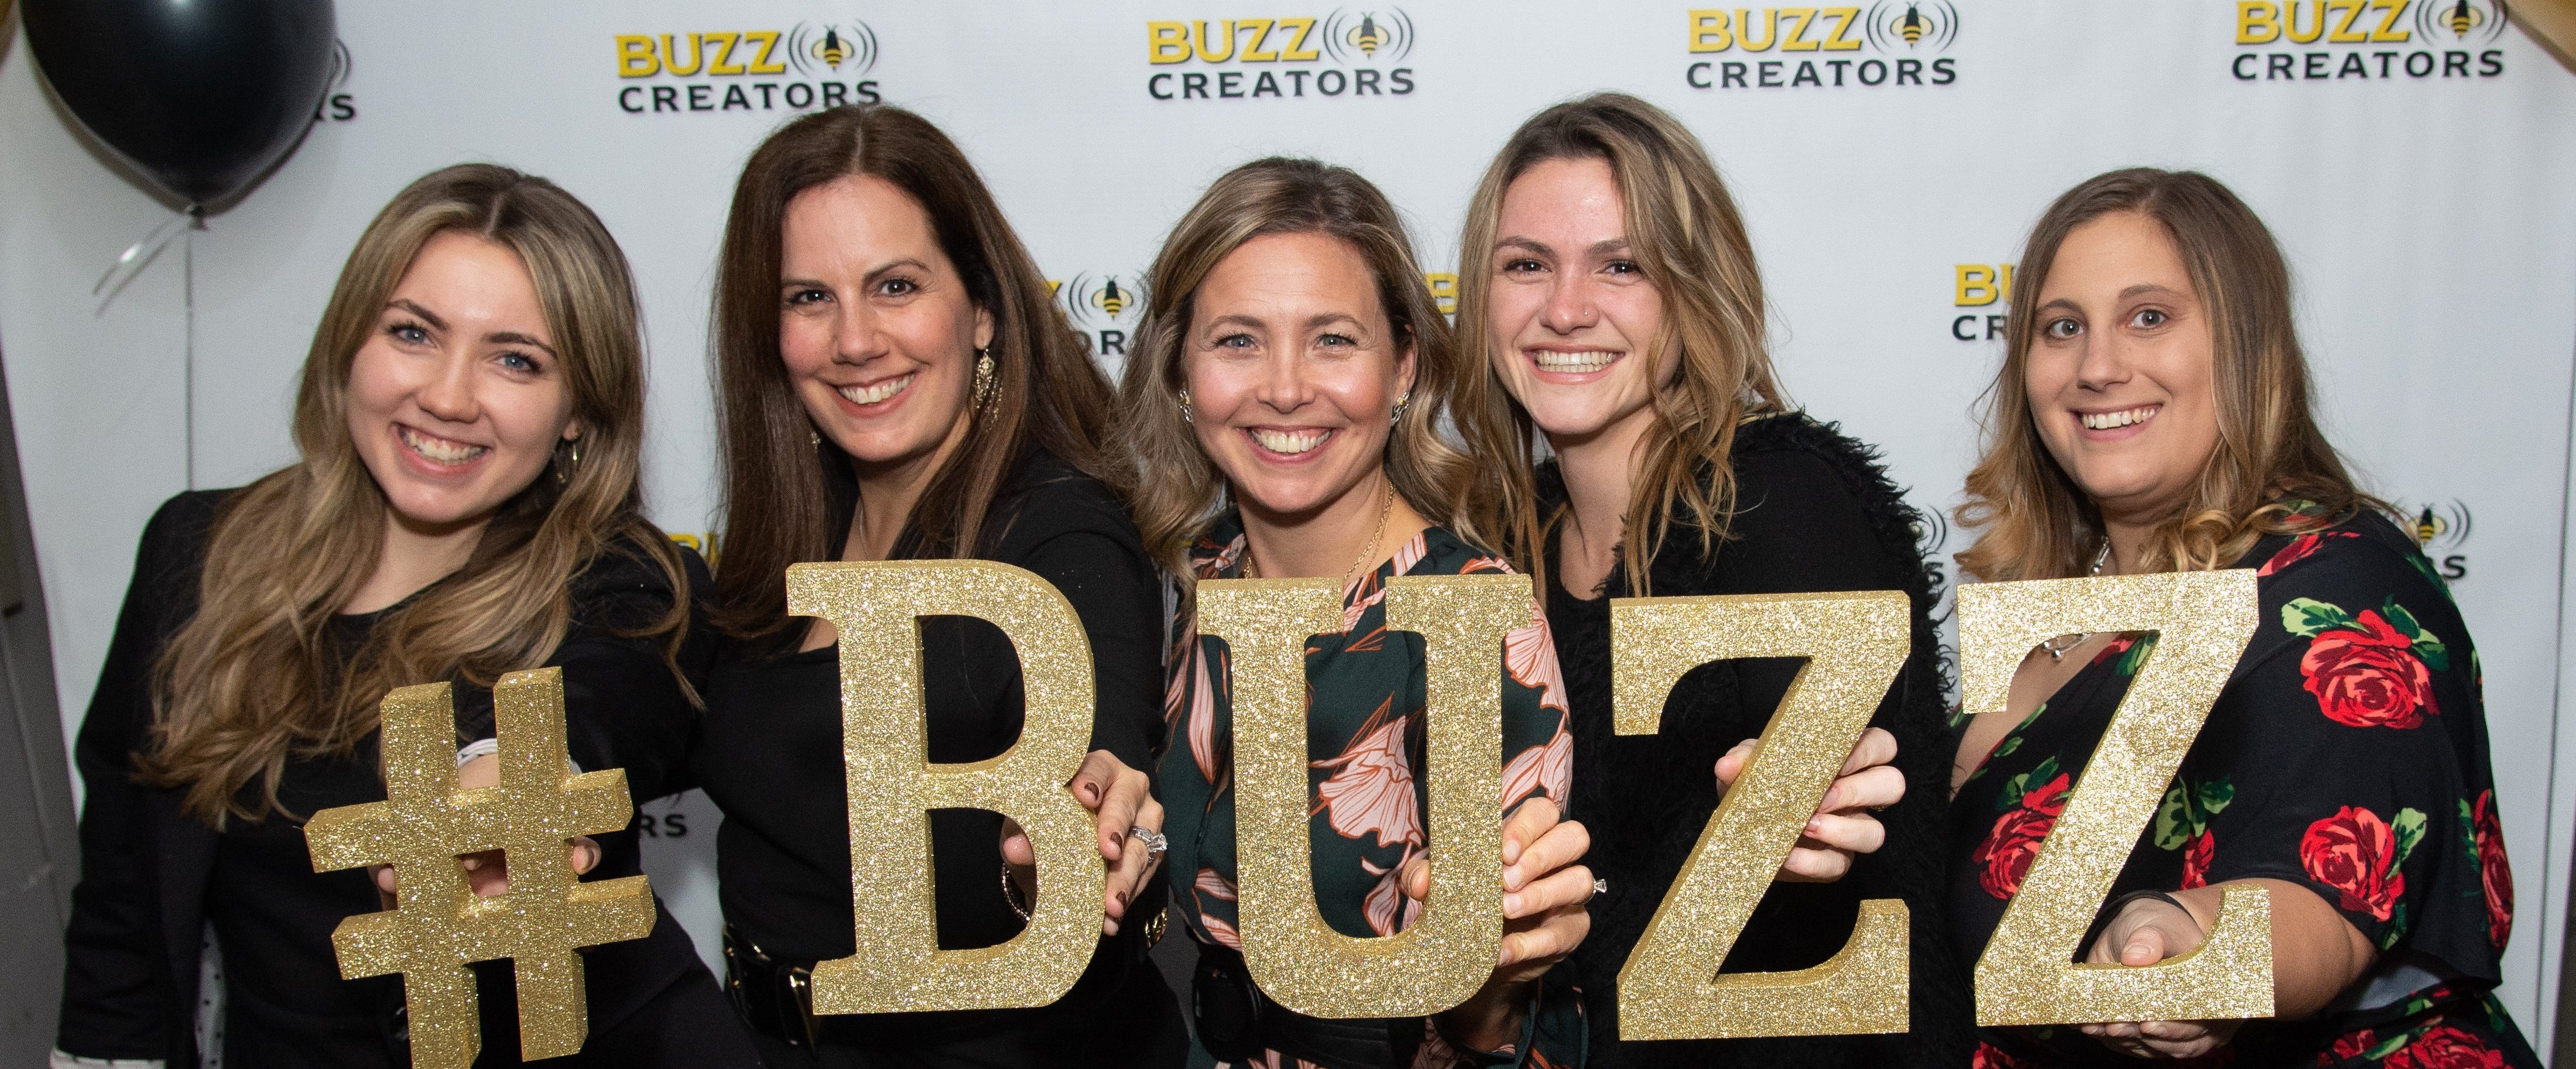 Buzz Creators Celebrates 10 Years of PR & Marketing